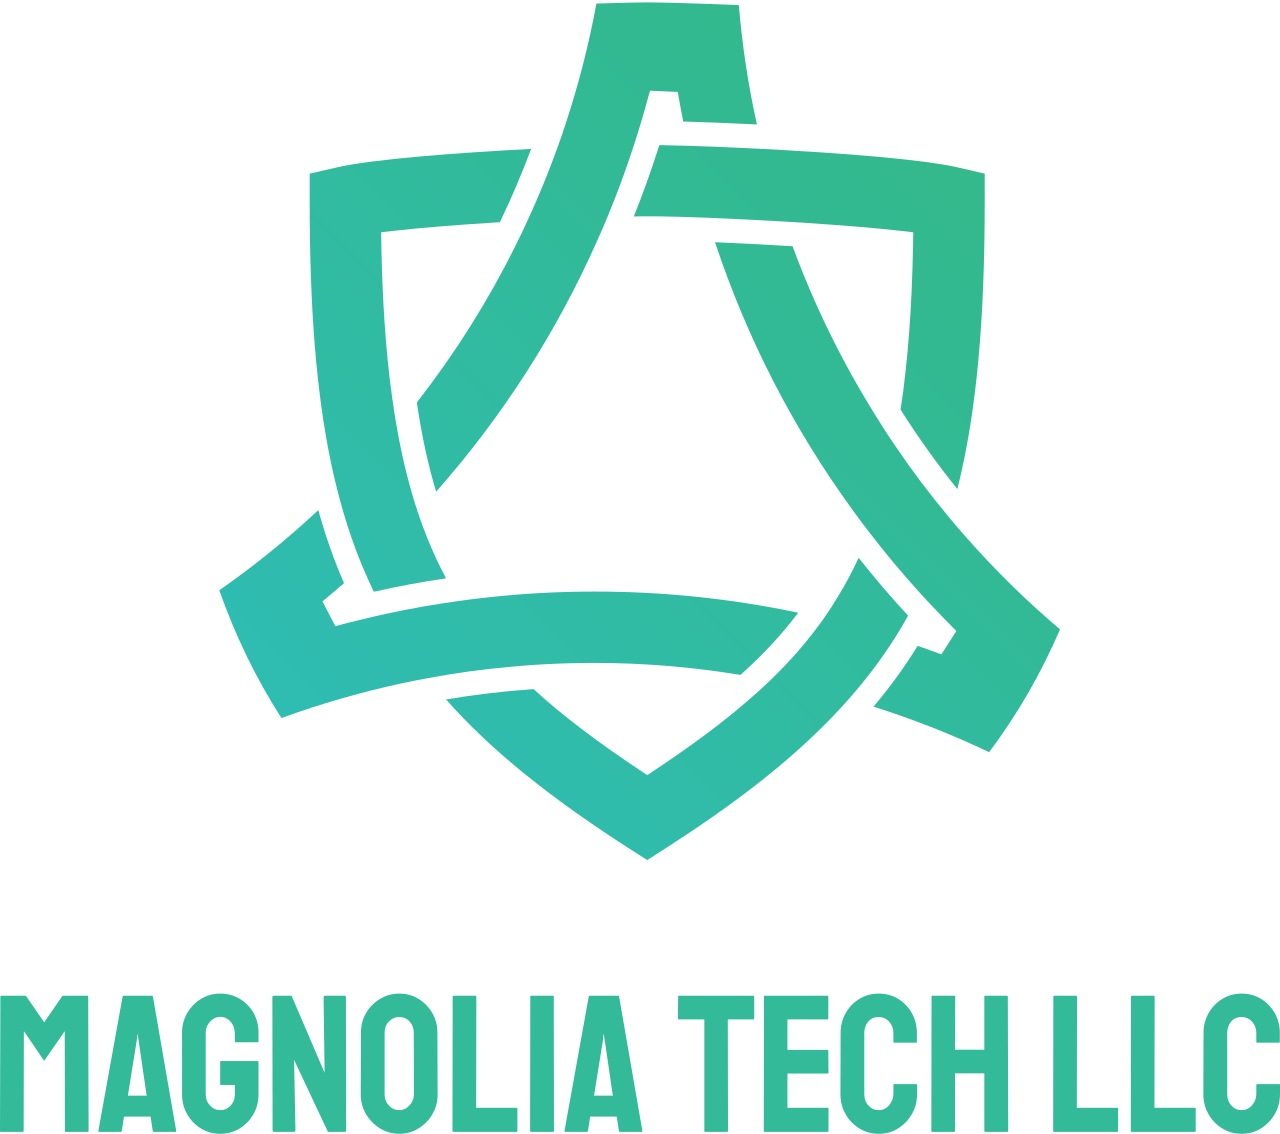 Magnolia tech LLC's logo